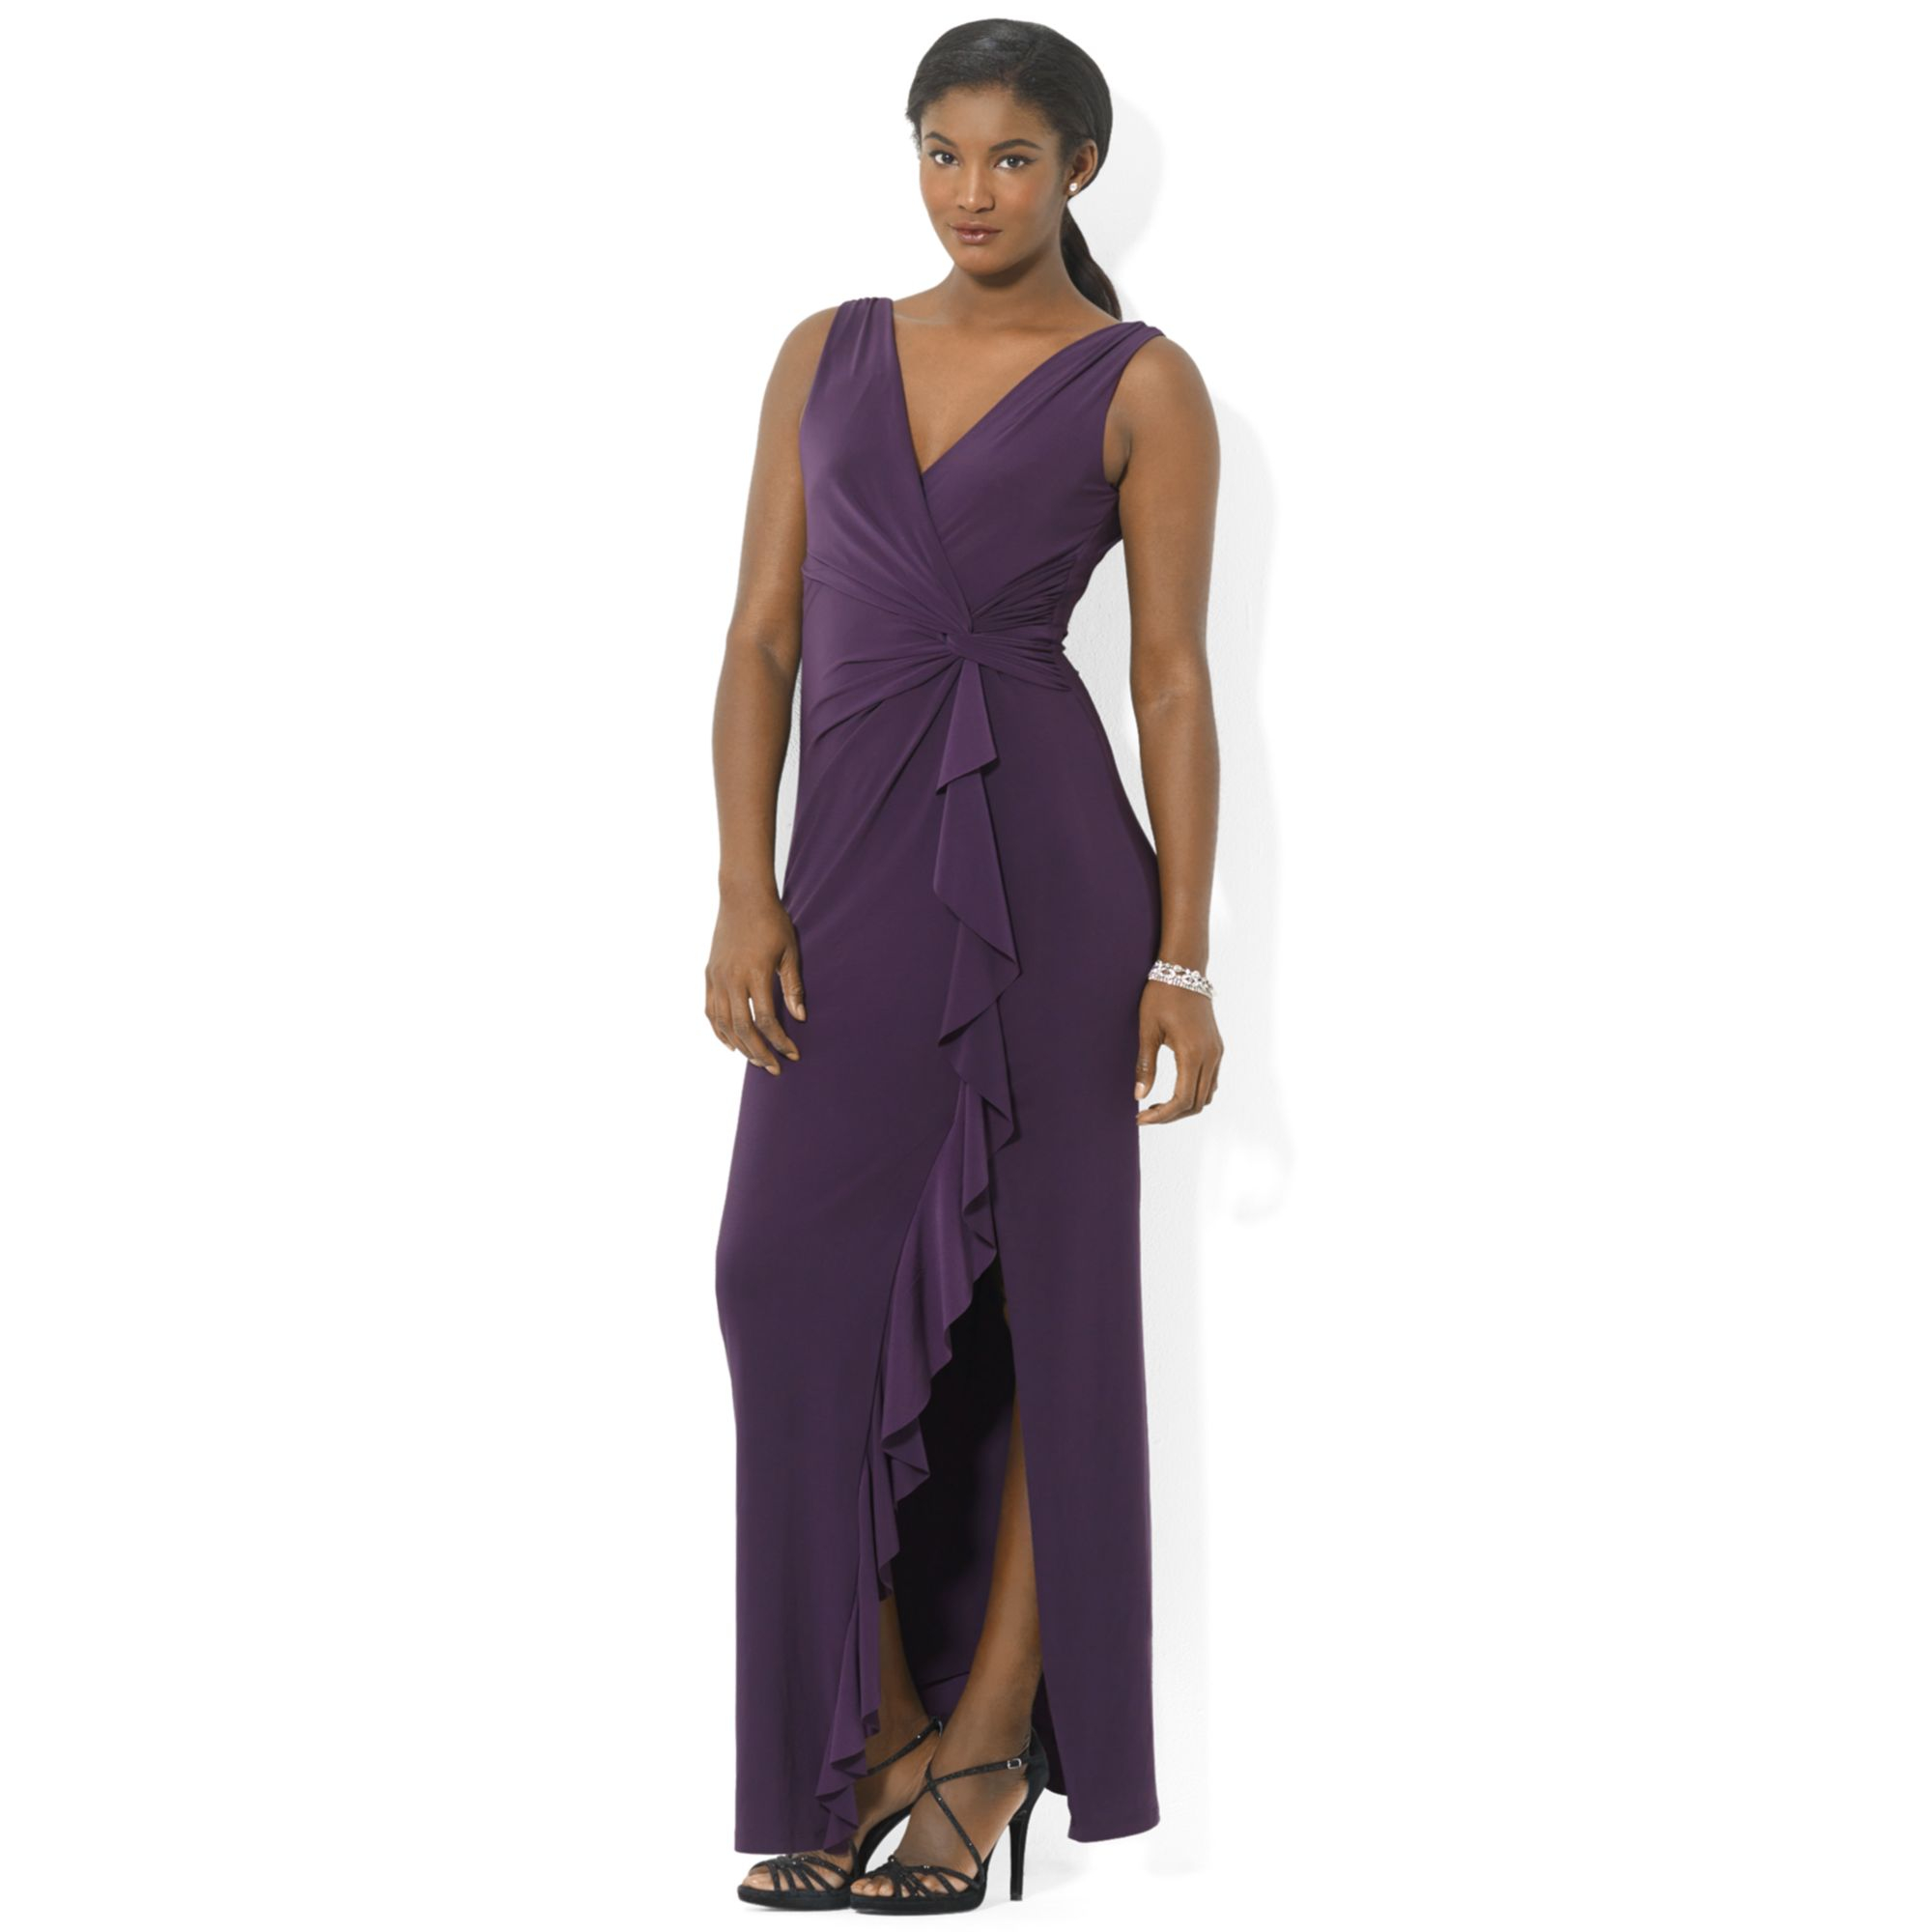 Lyst - Lauren By Ralph Lauren Sleeveless Draped Gown in Purple